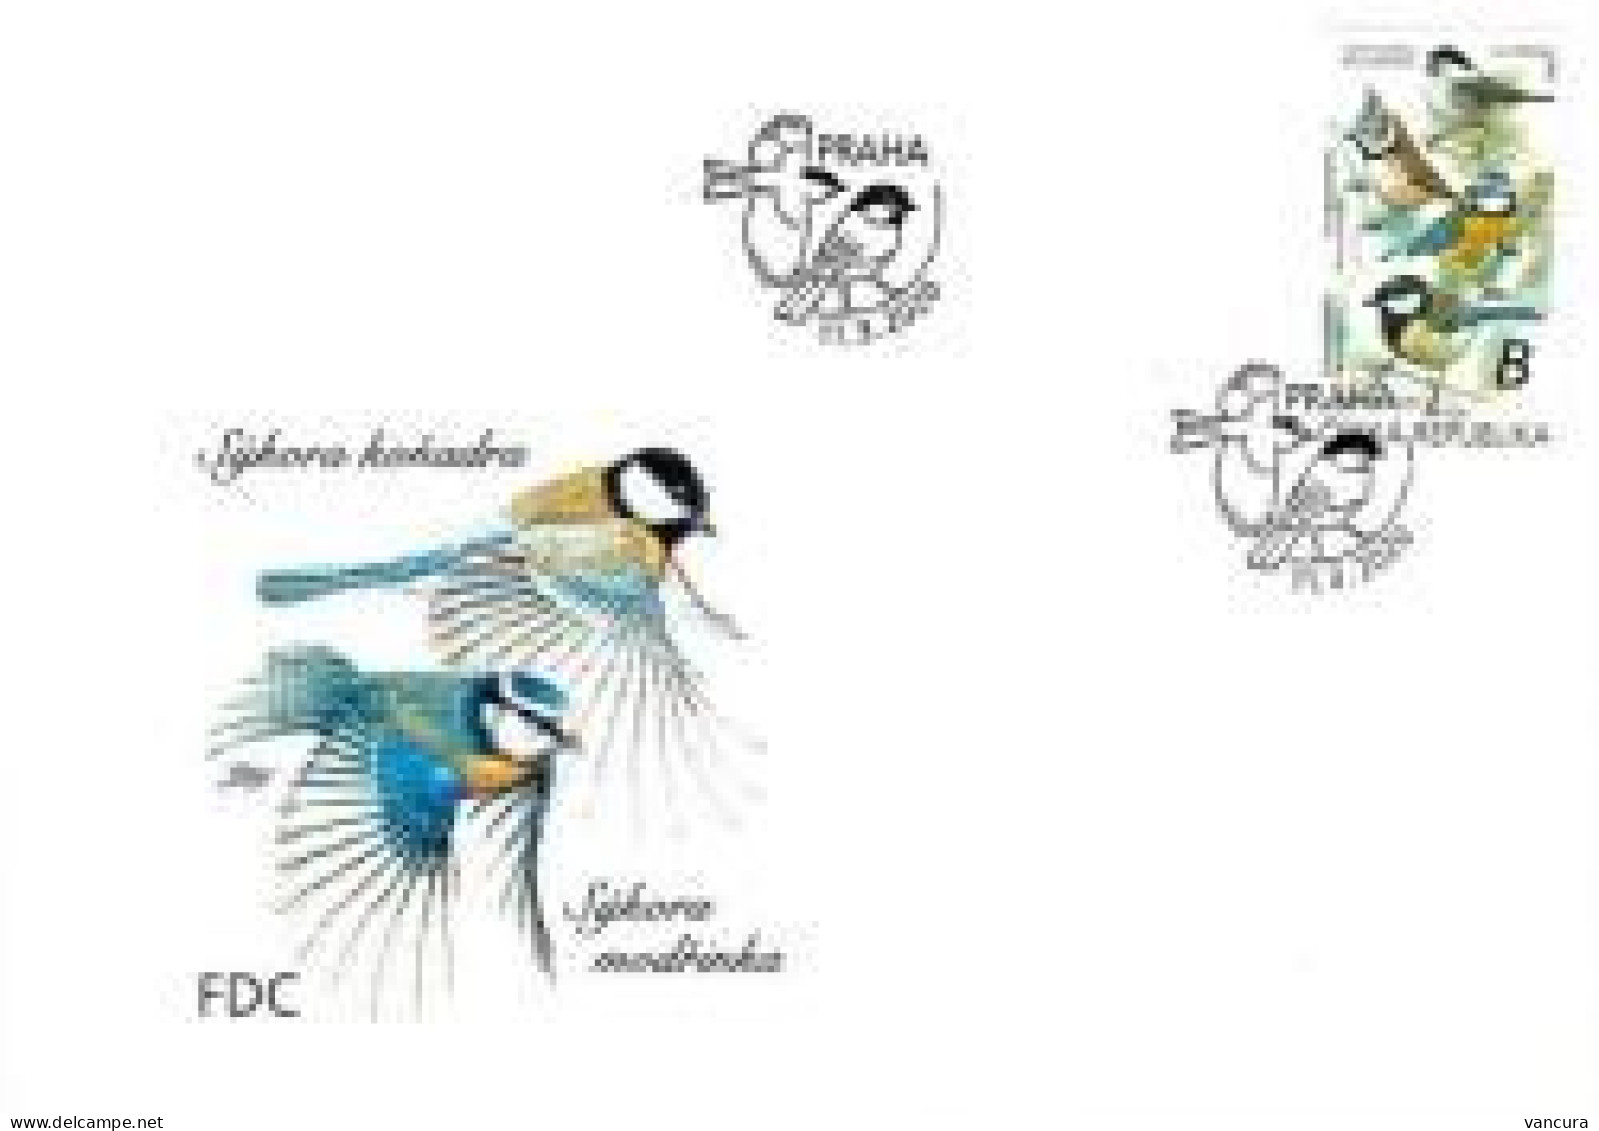 FDC 1067/8, 1076/7, 1083/4 Czech Republic 2020 Songbirds - FDC